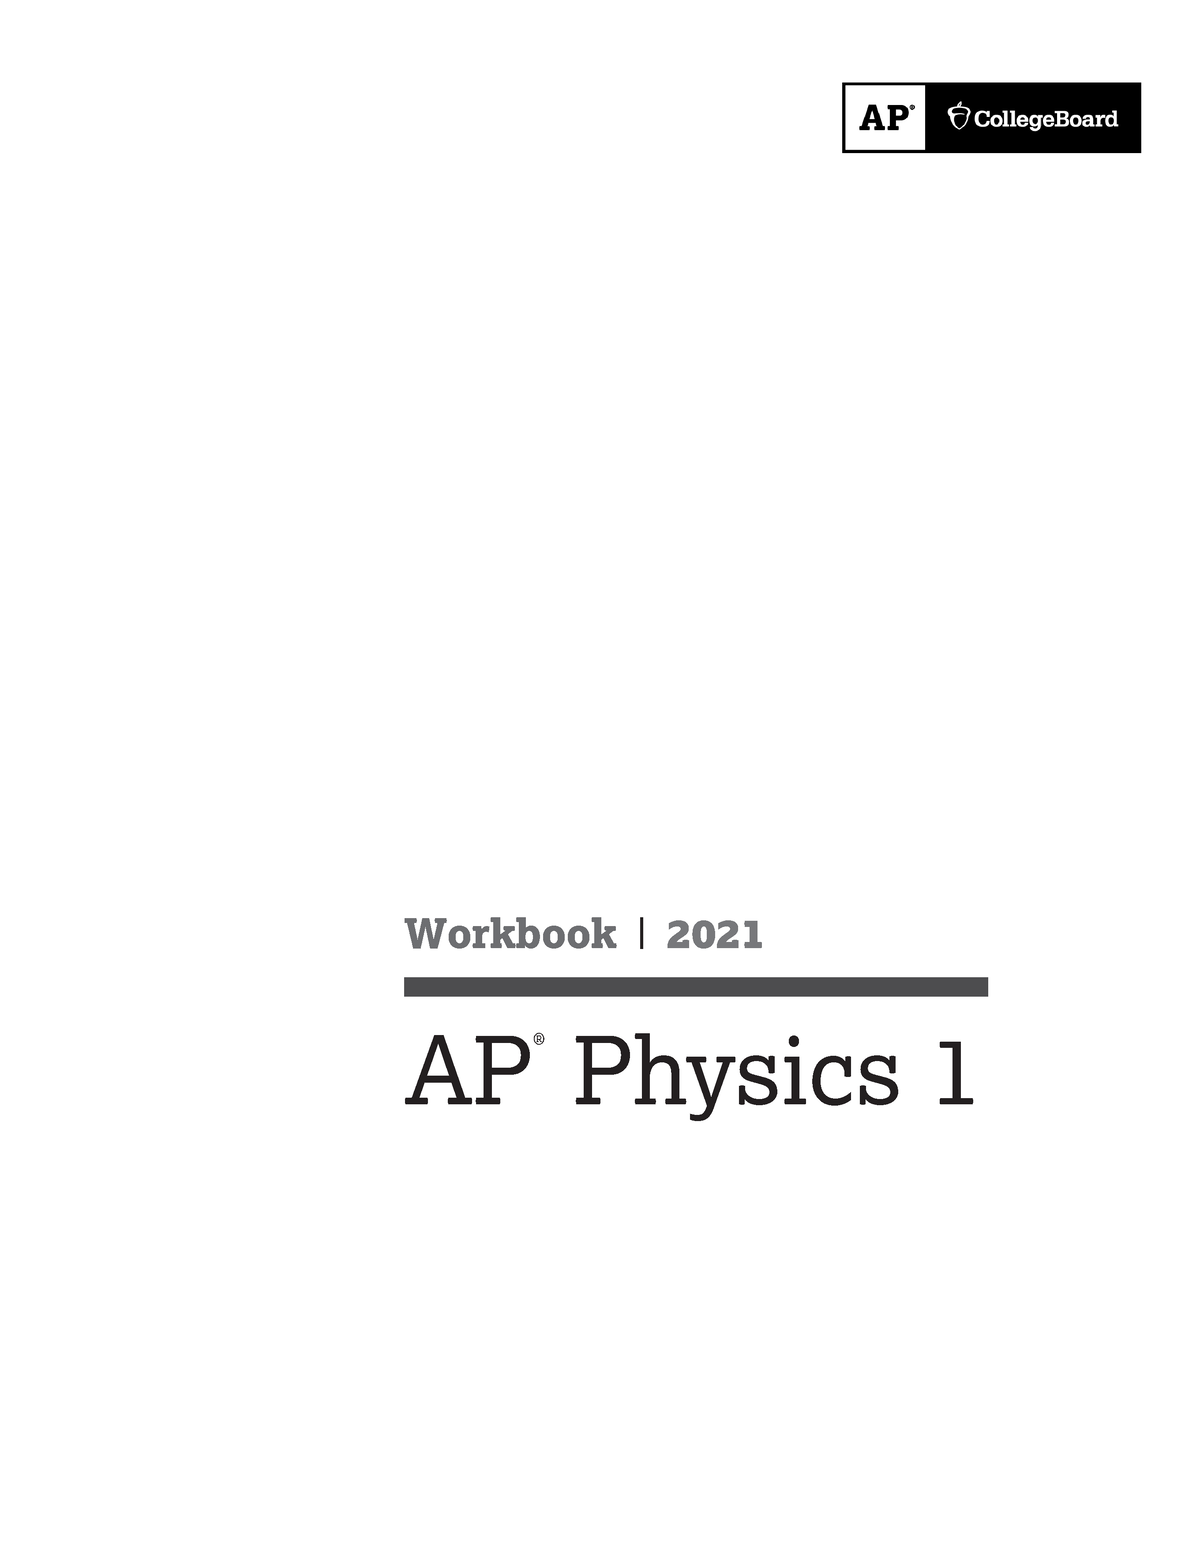 ap research student workbook 2021